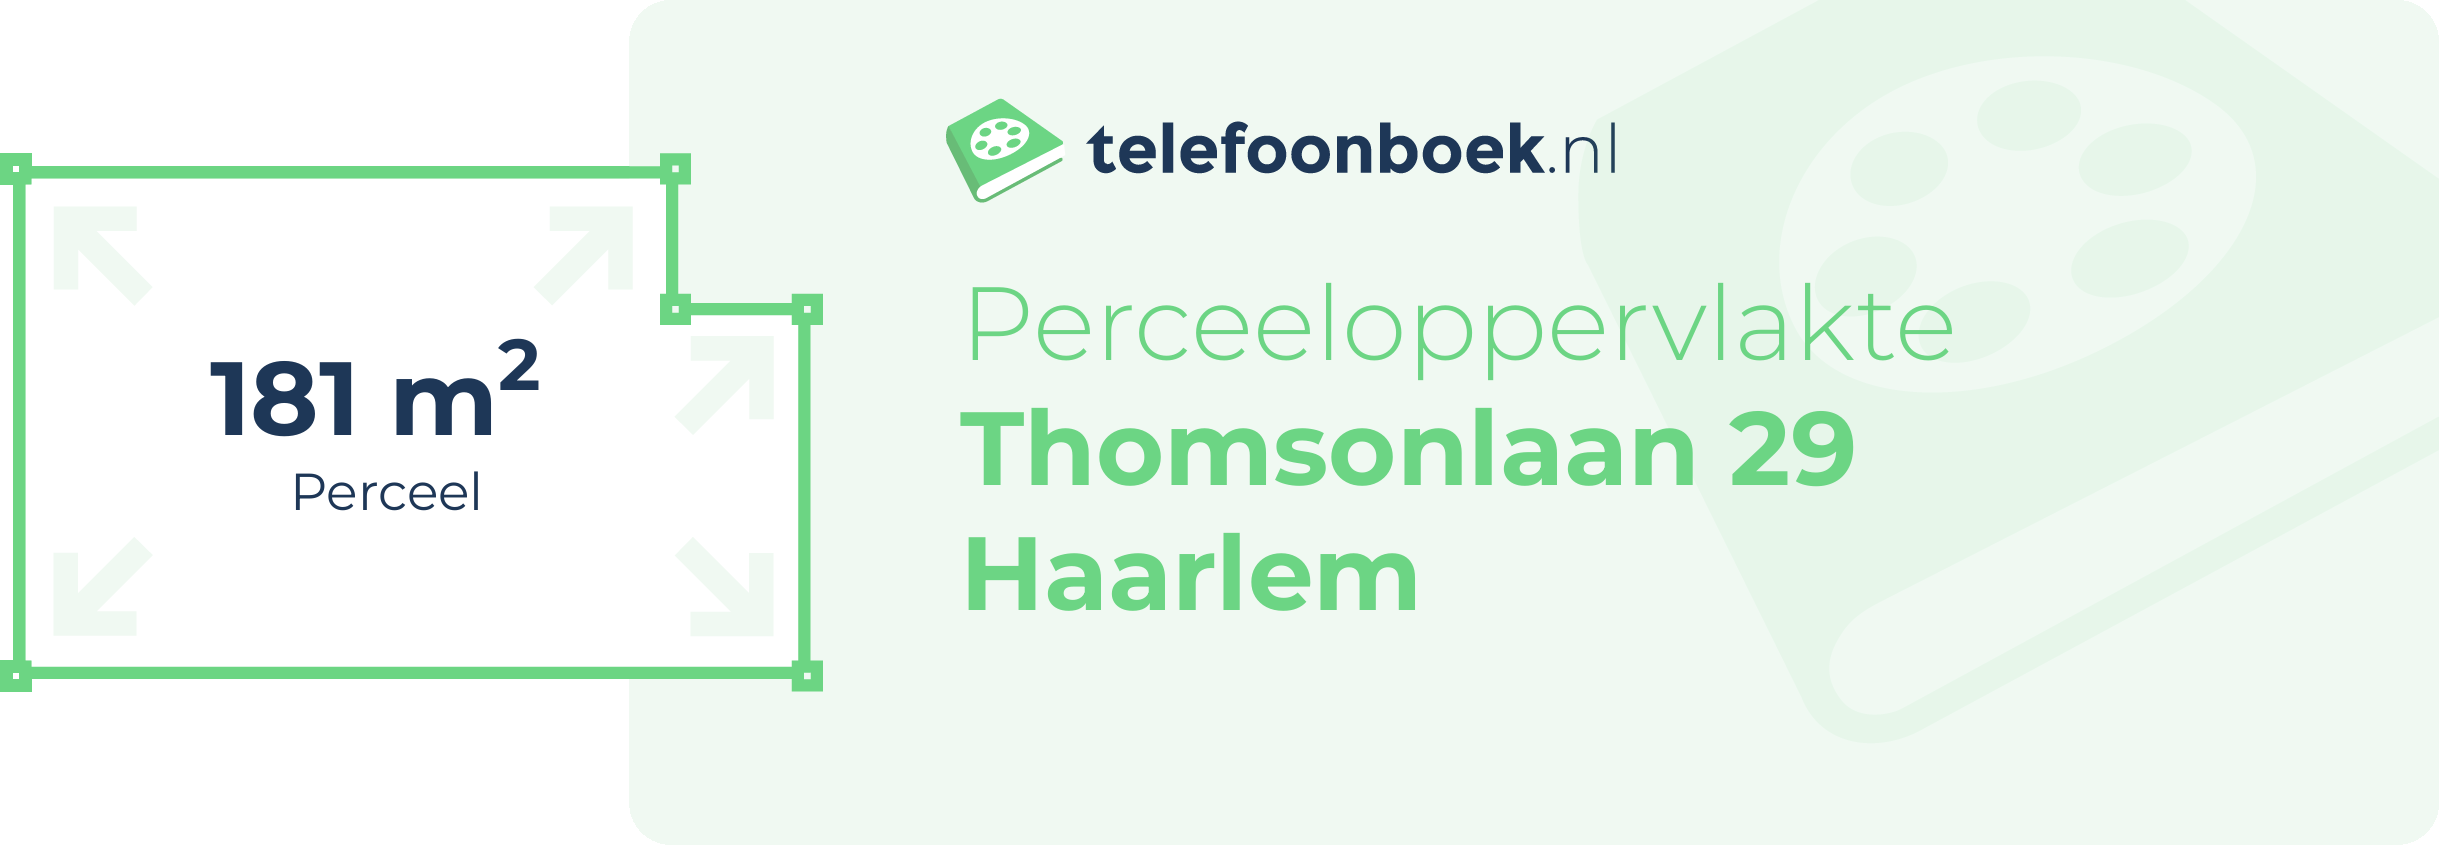 Perceeloppervlakte Thomsonlaan 29 Haarlem